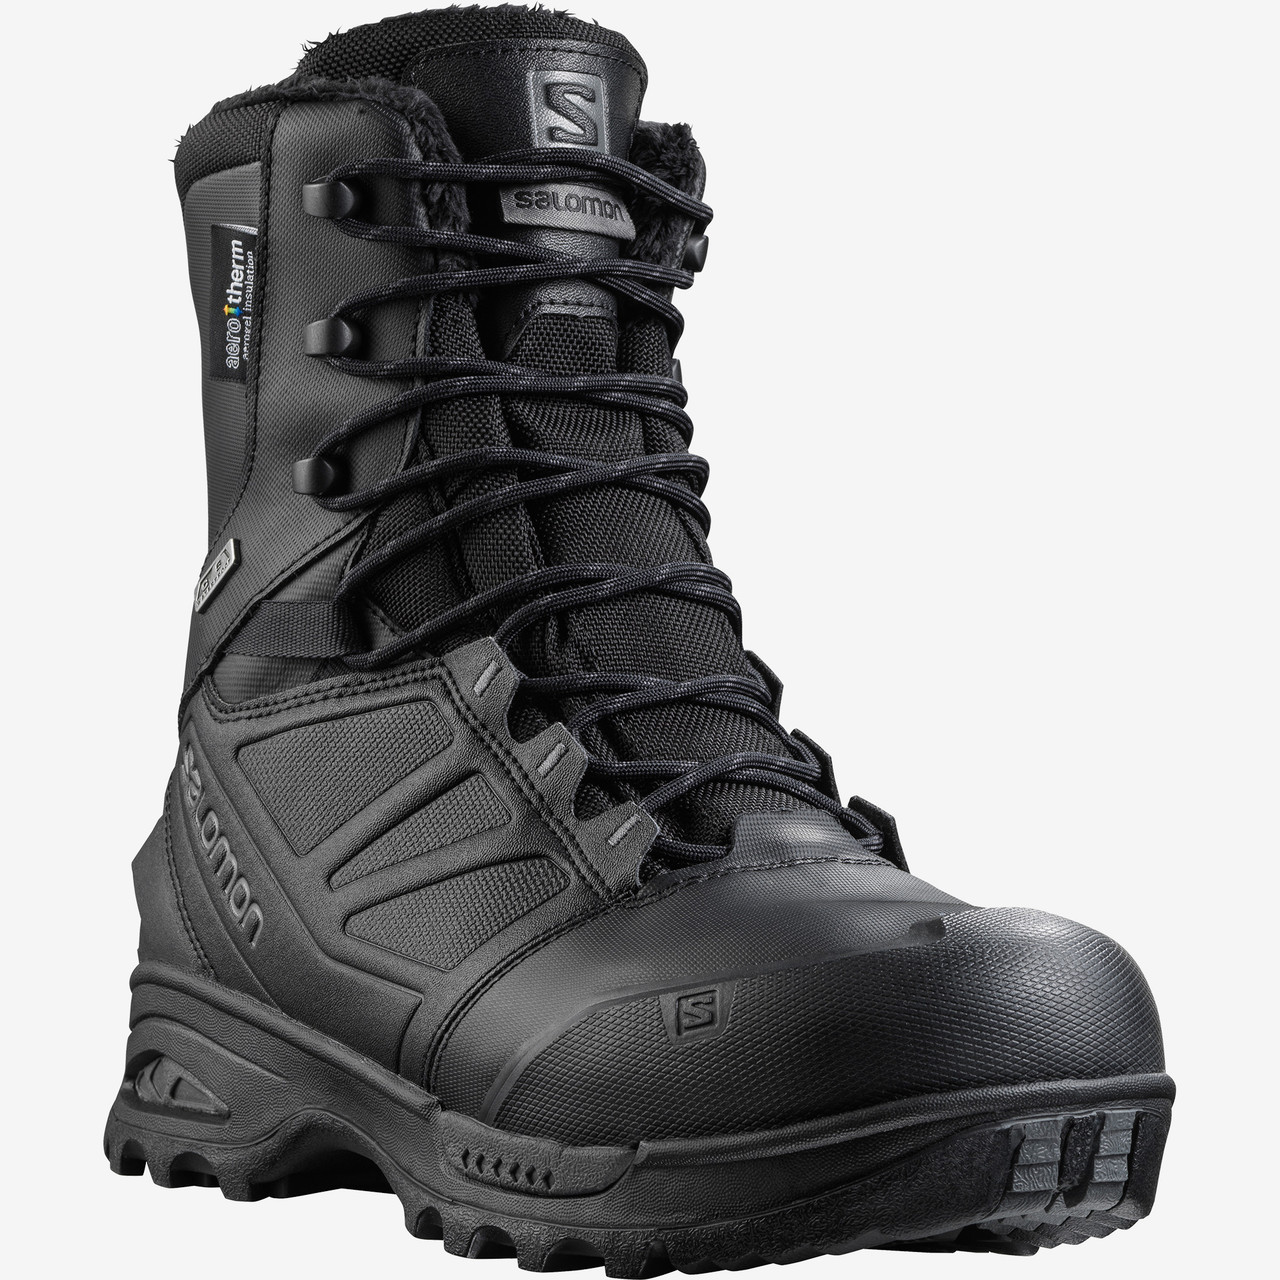 Salomon L40165000 Toundra Forces CSWP Unisex 8 inch Boots, Lightweight, Uniform or Casual, Waterproof, Black